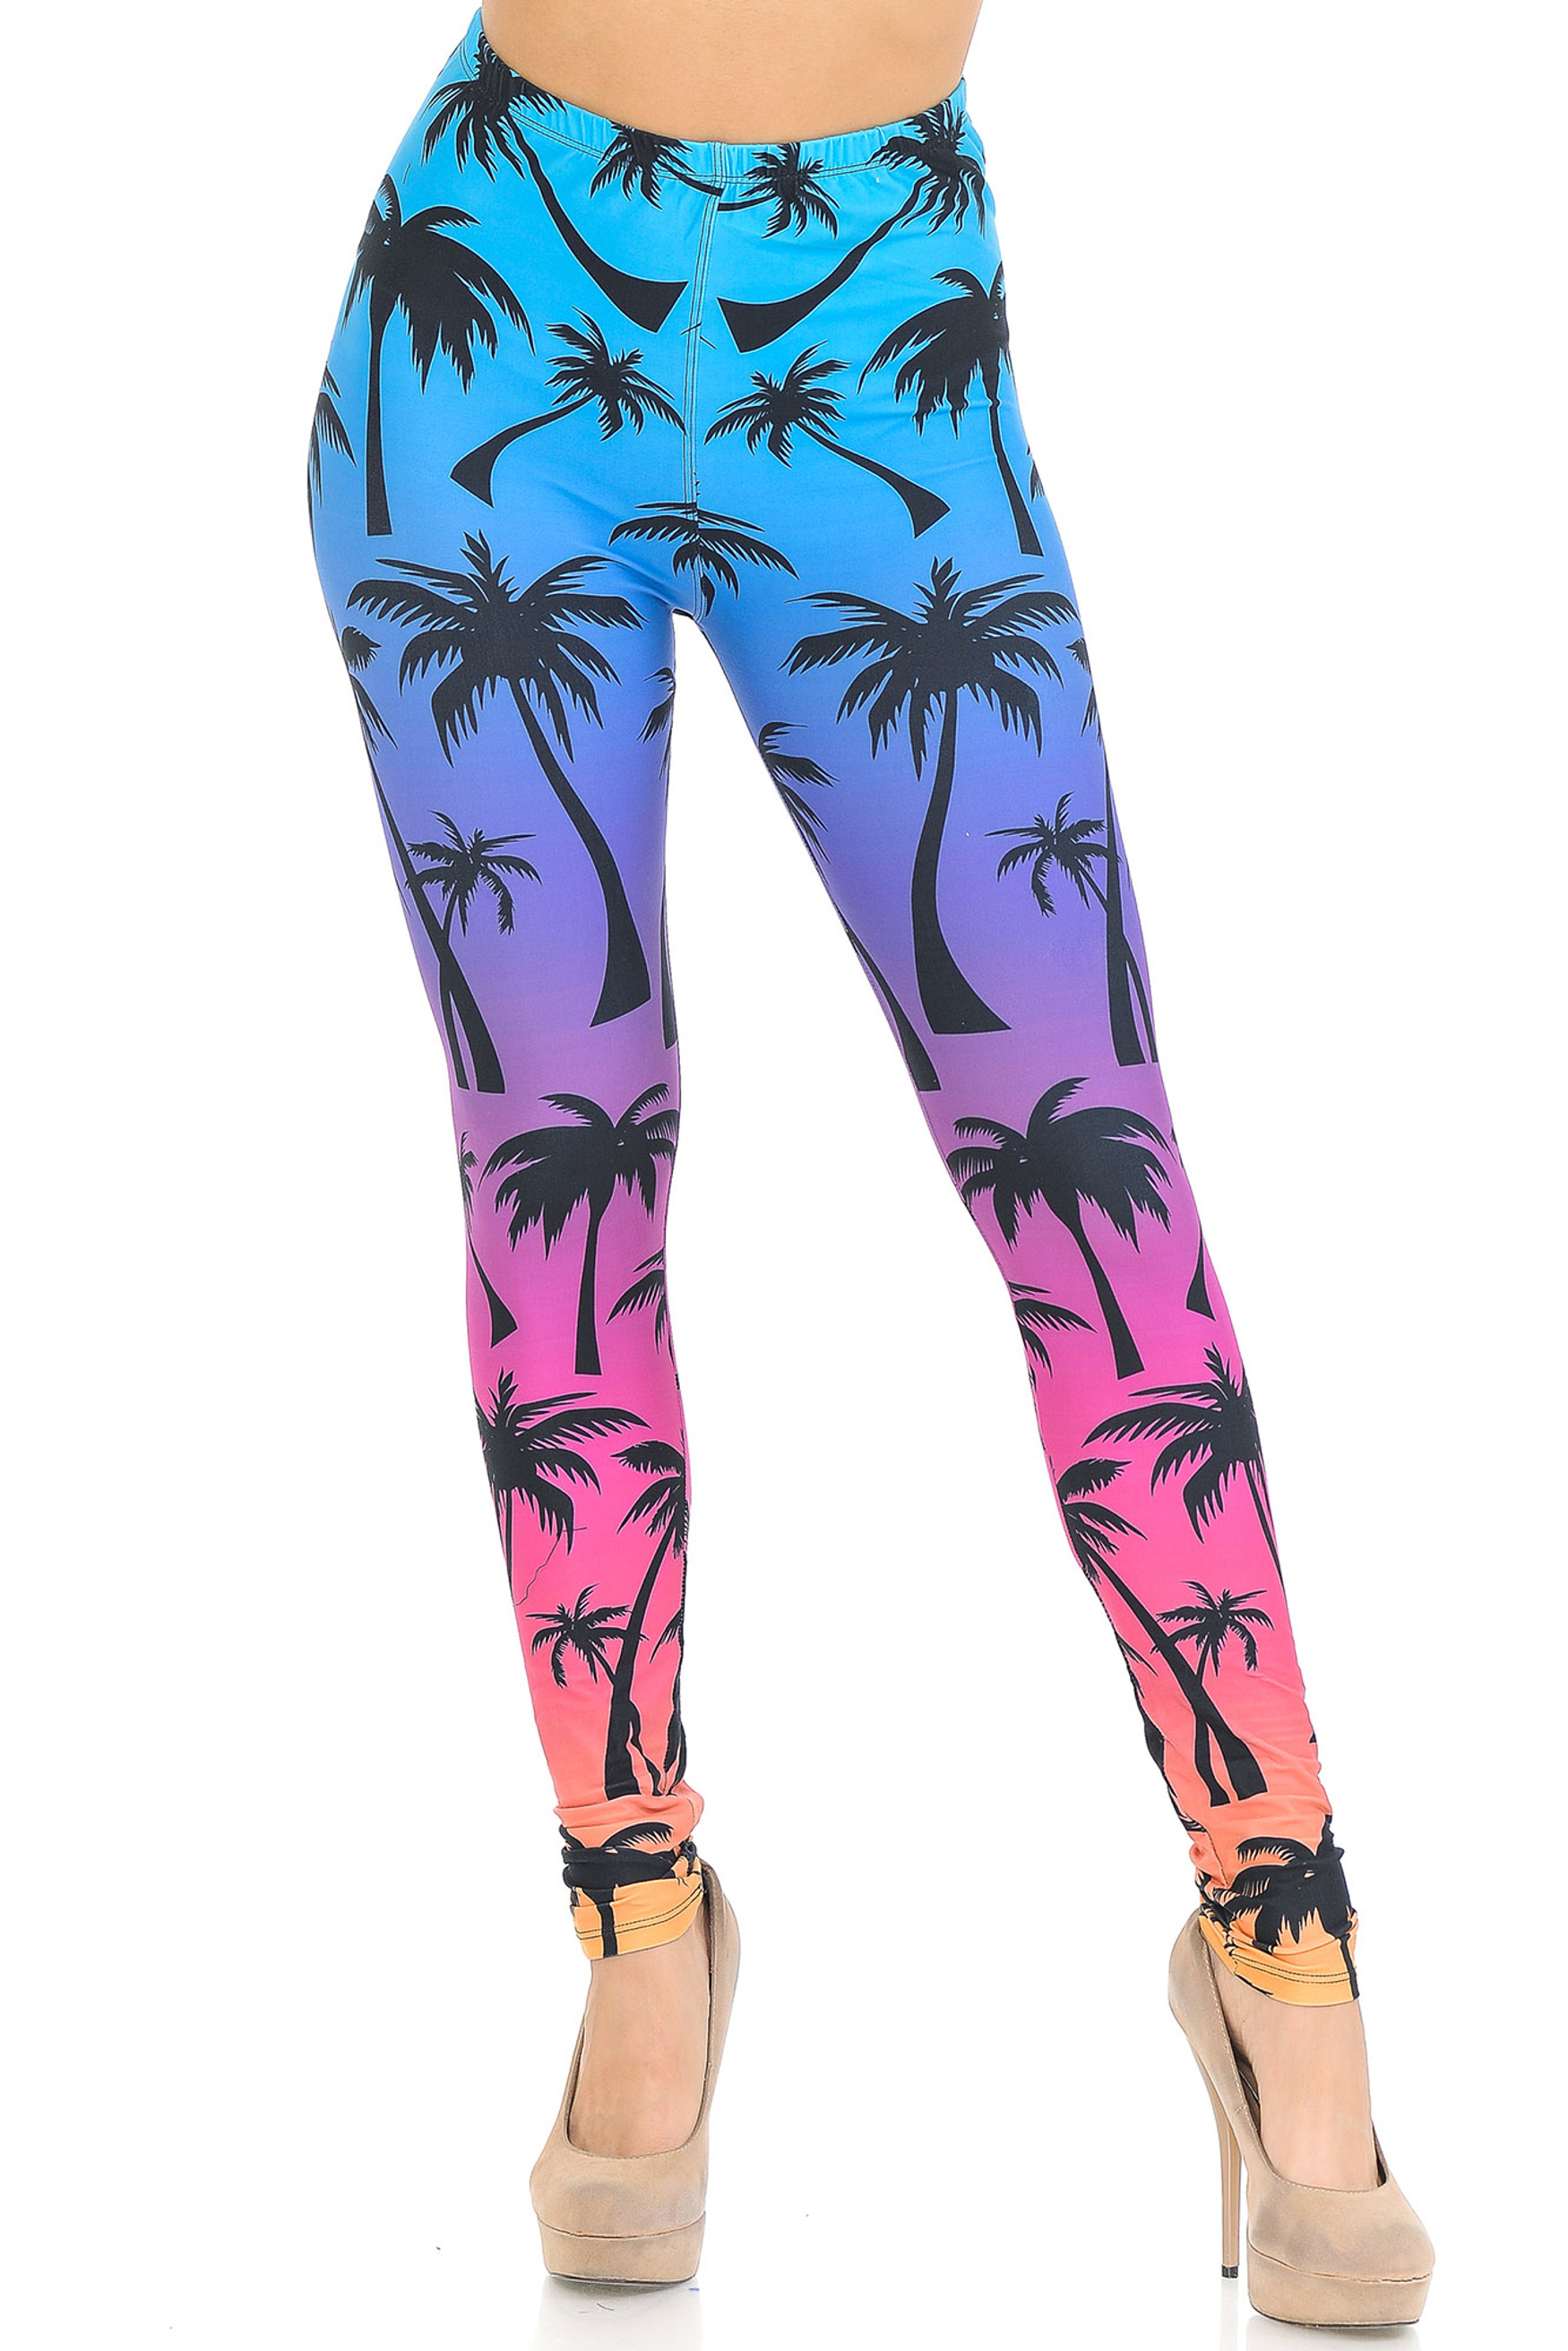 Creamy Soft Ombre Palm Tree Leggings - USA Fashion™